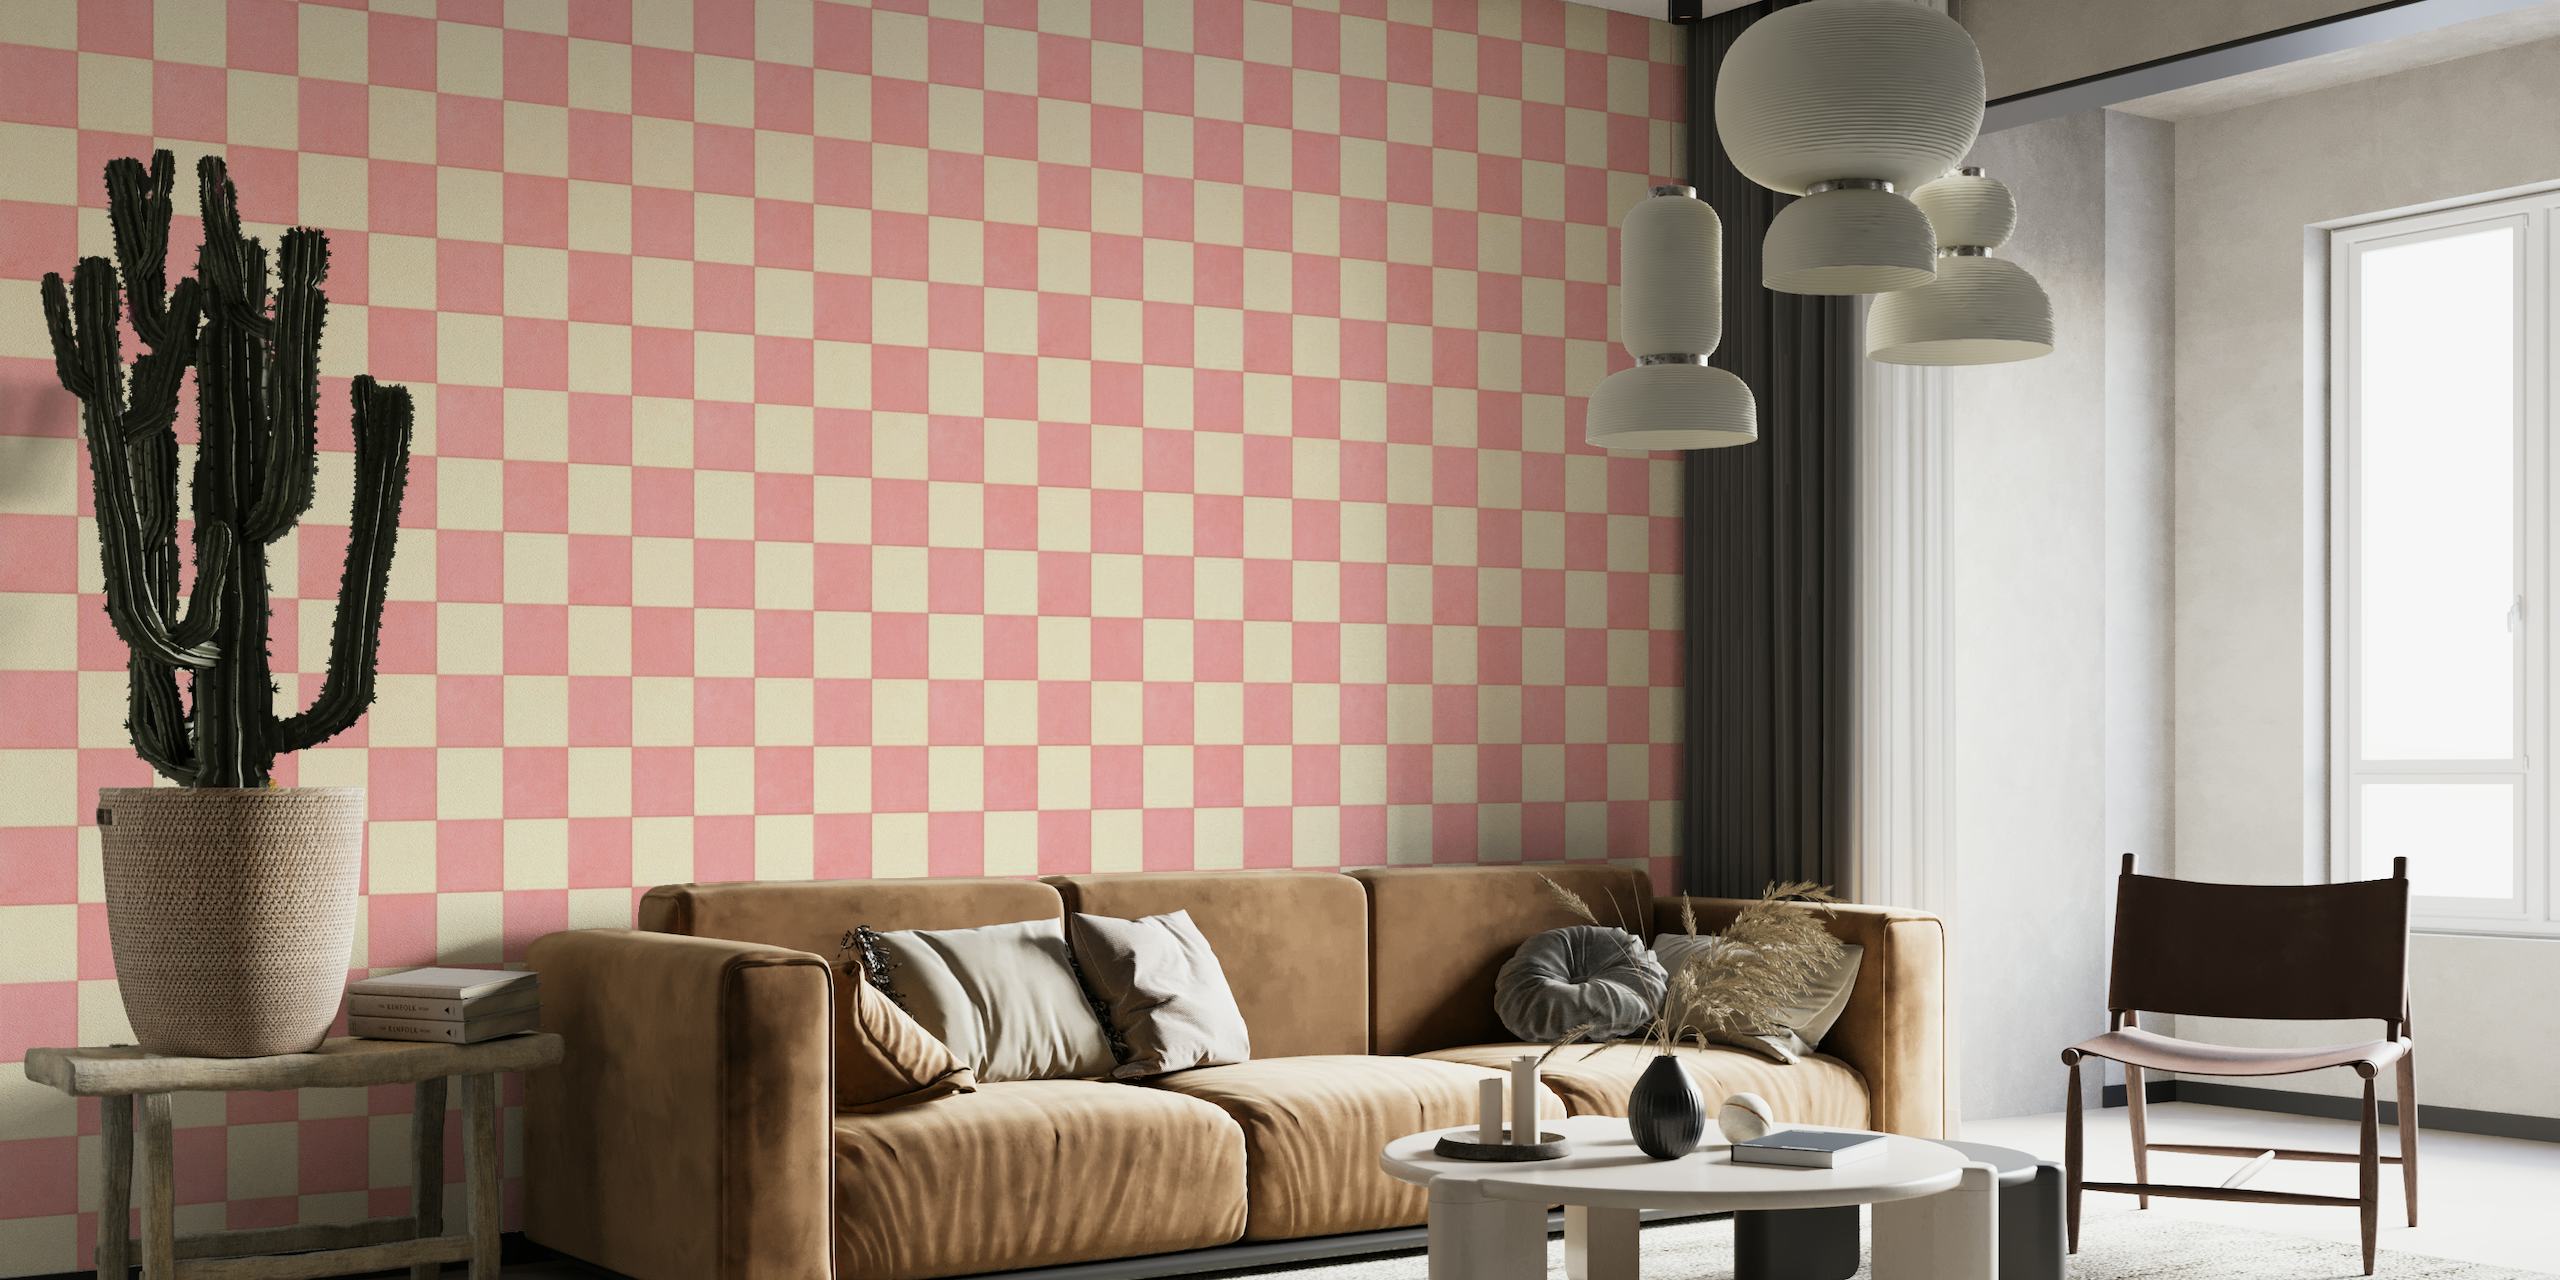 TILES 012 C - Checkerboard wallpaper